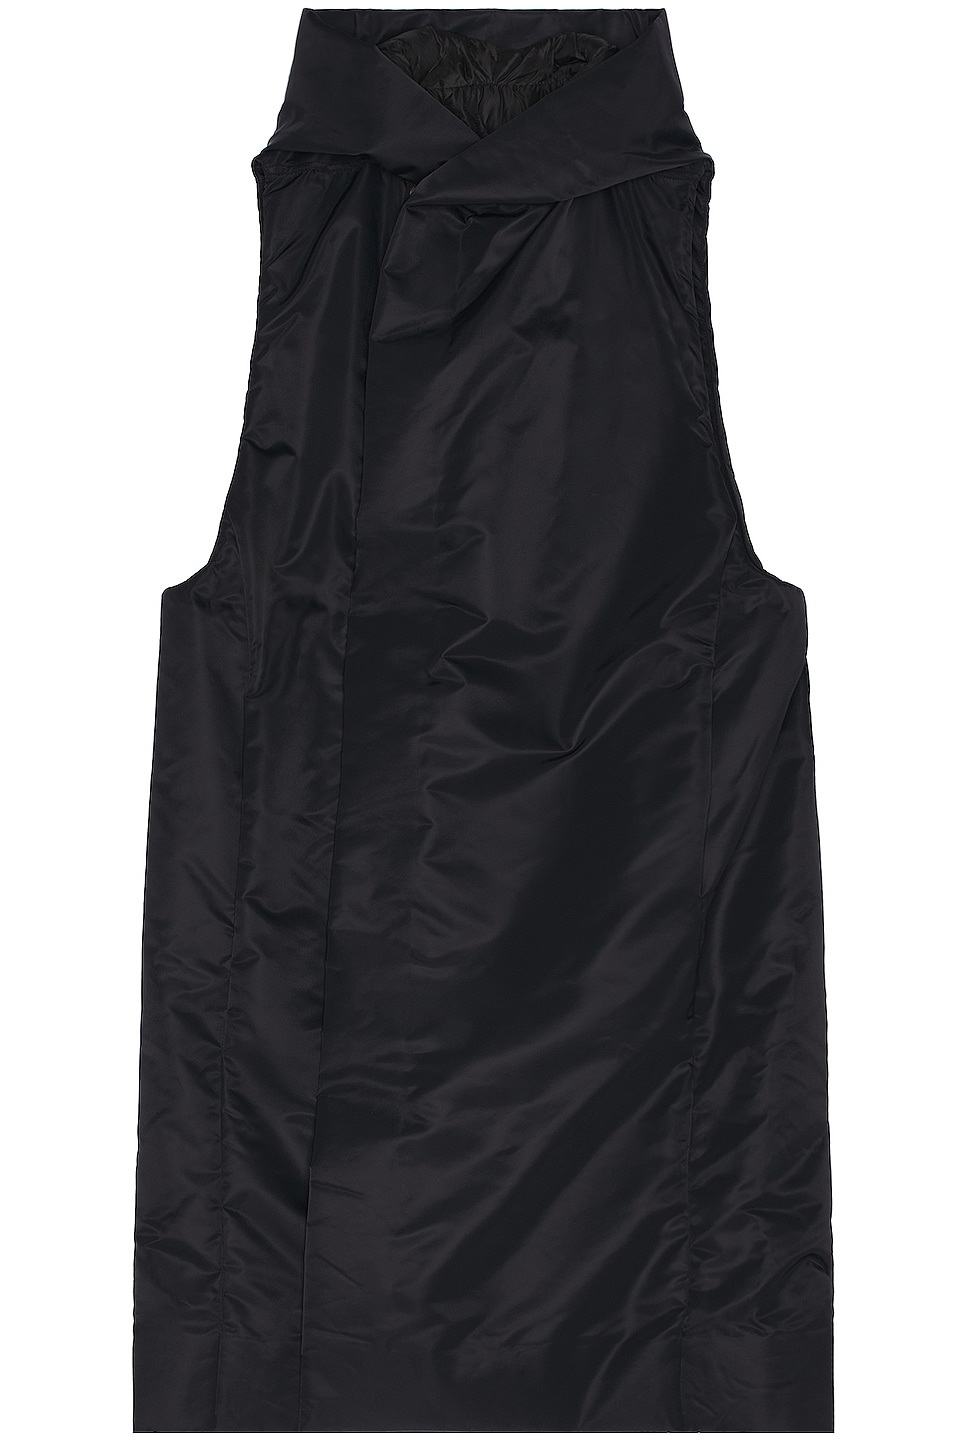 Image 1 of Rick Owens Hooded Liner Jacket in Black